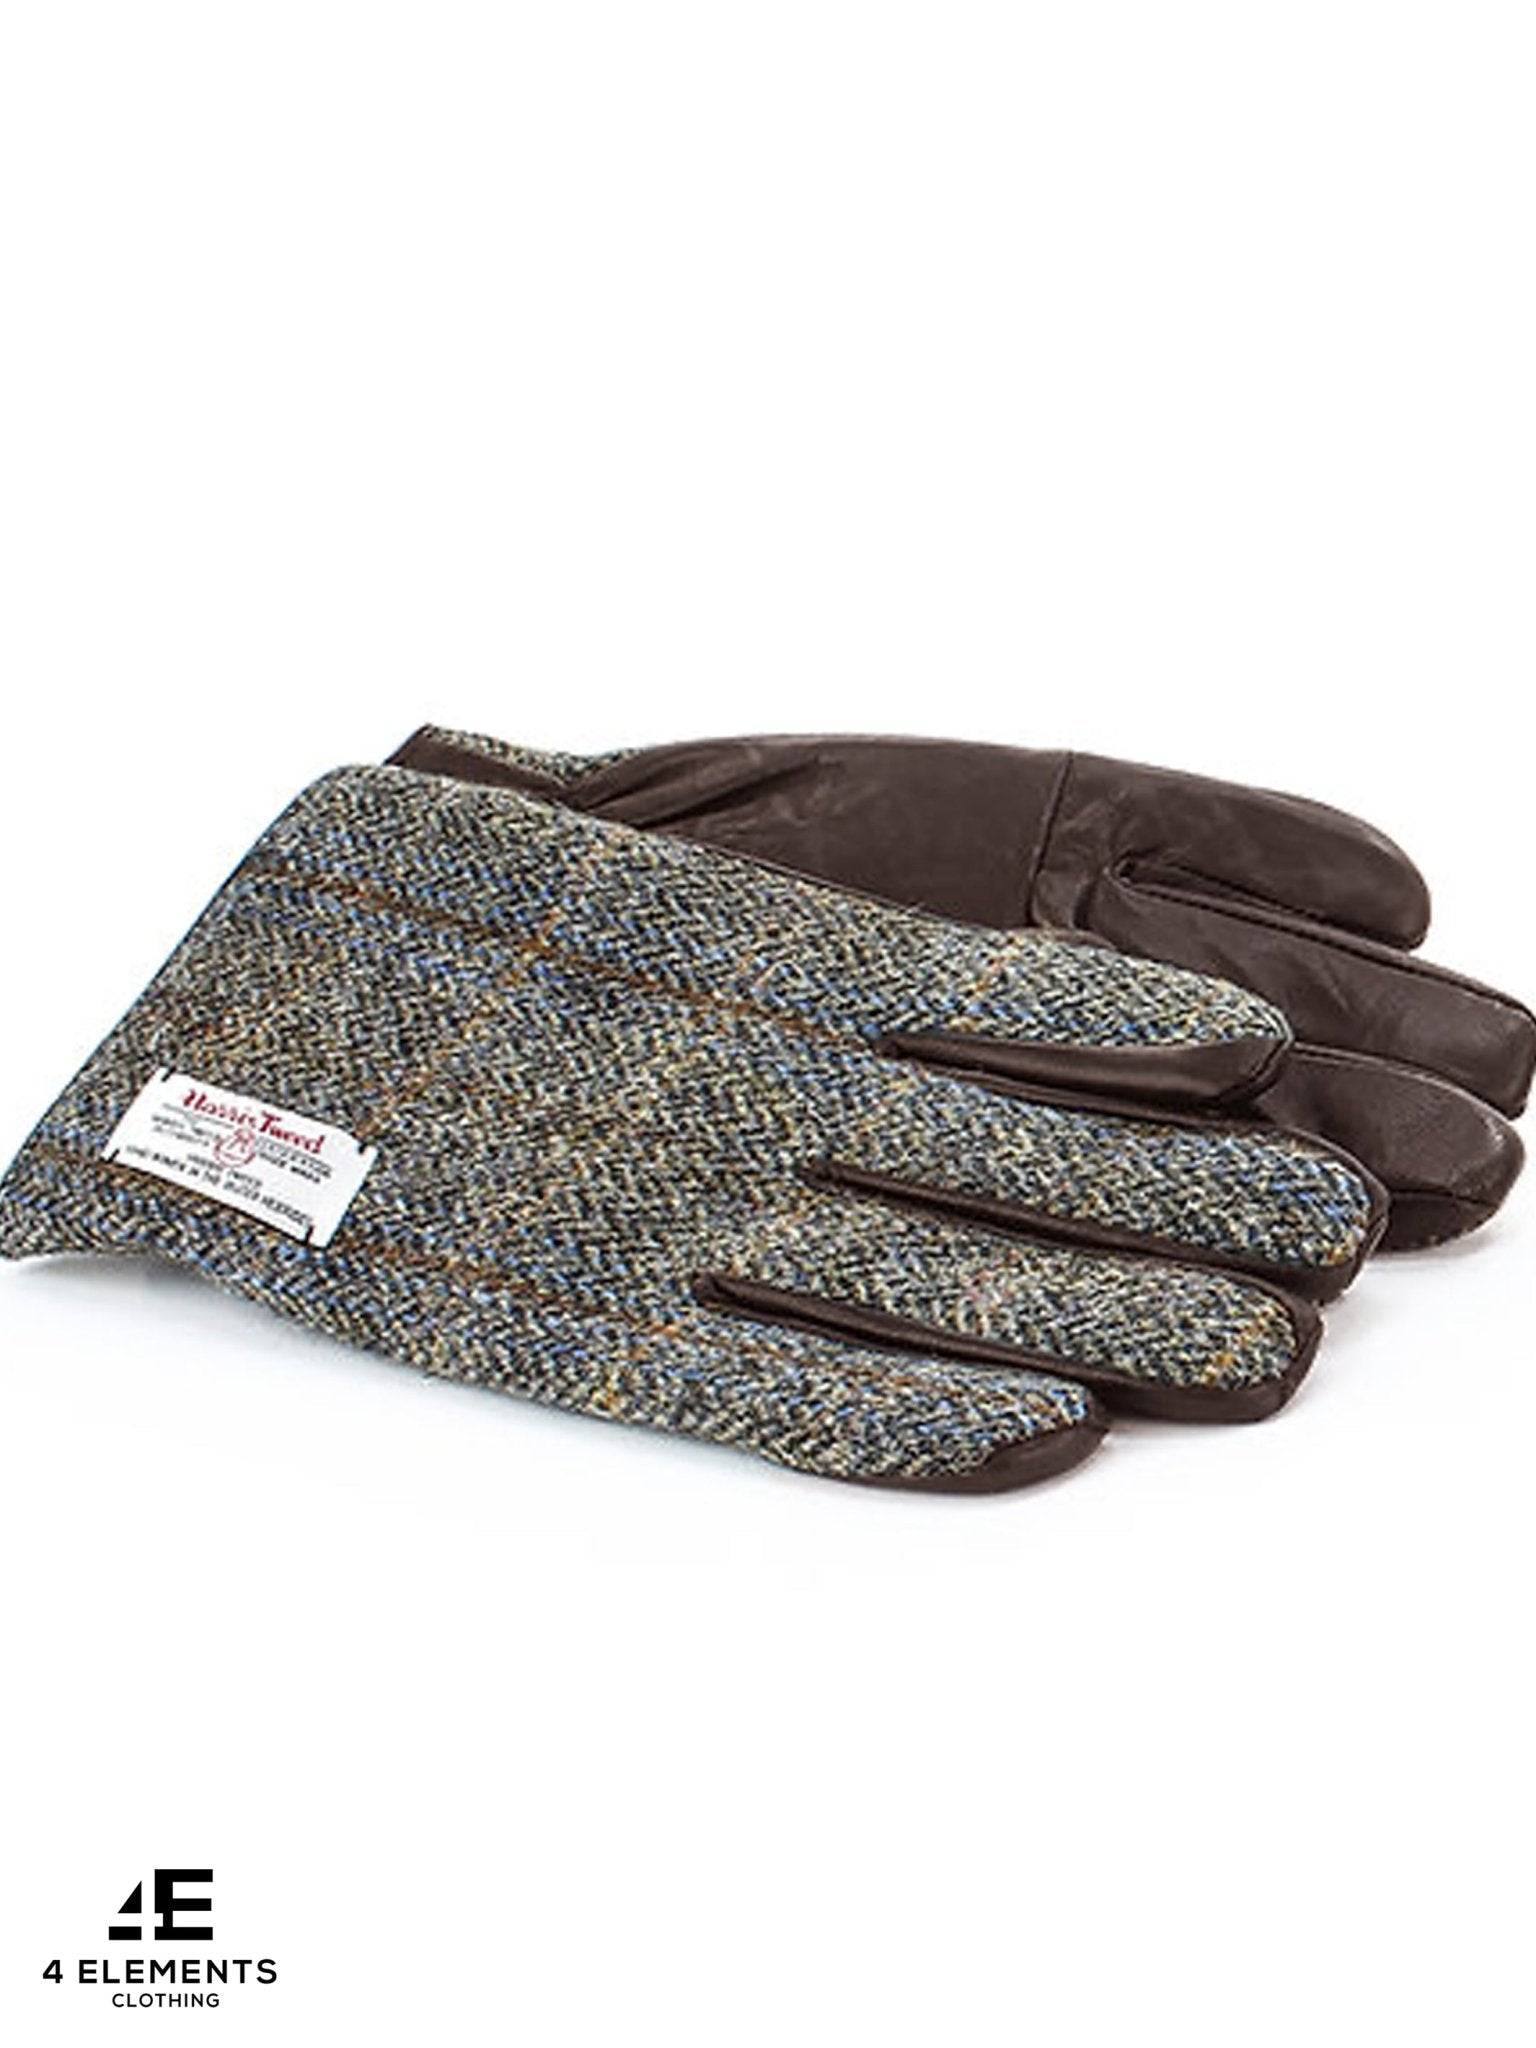 4elementsclothingThe British Bag CompanyThe British Bag Company - Carloway Harris Tweed Premium GlovesGloves3135001203